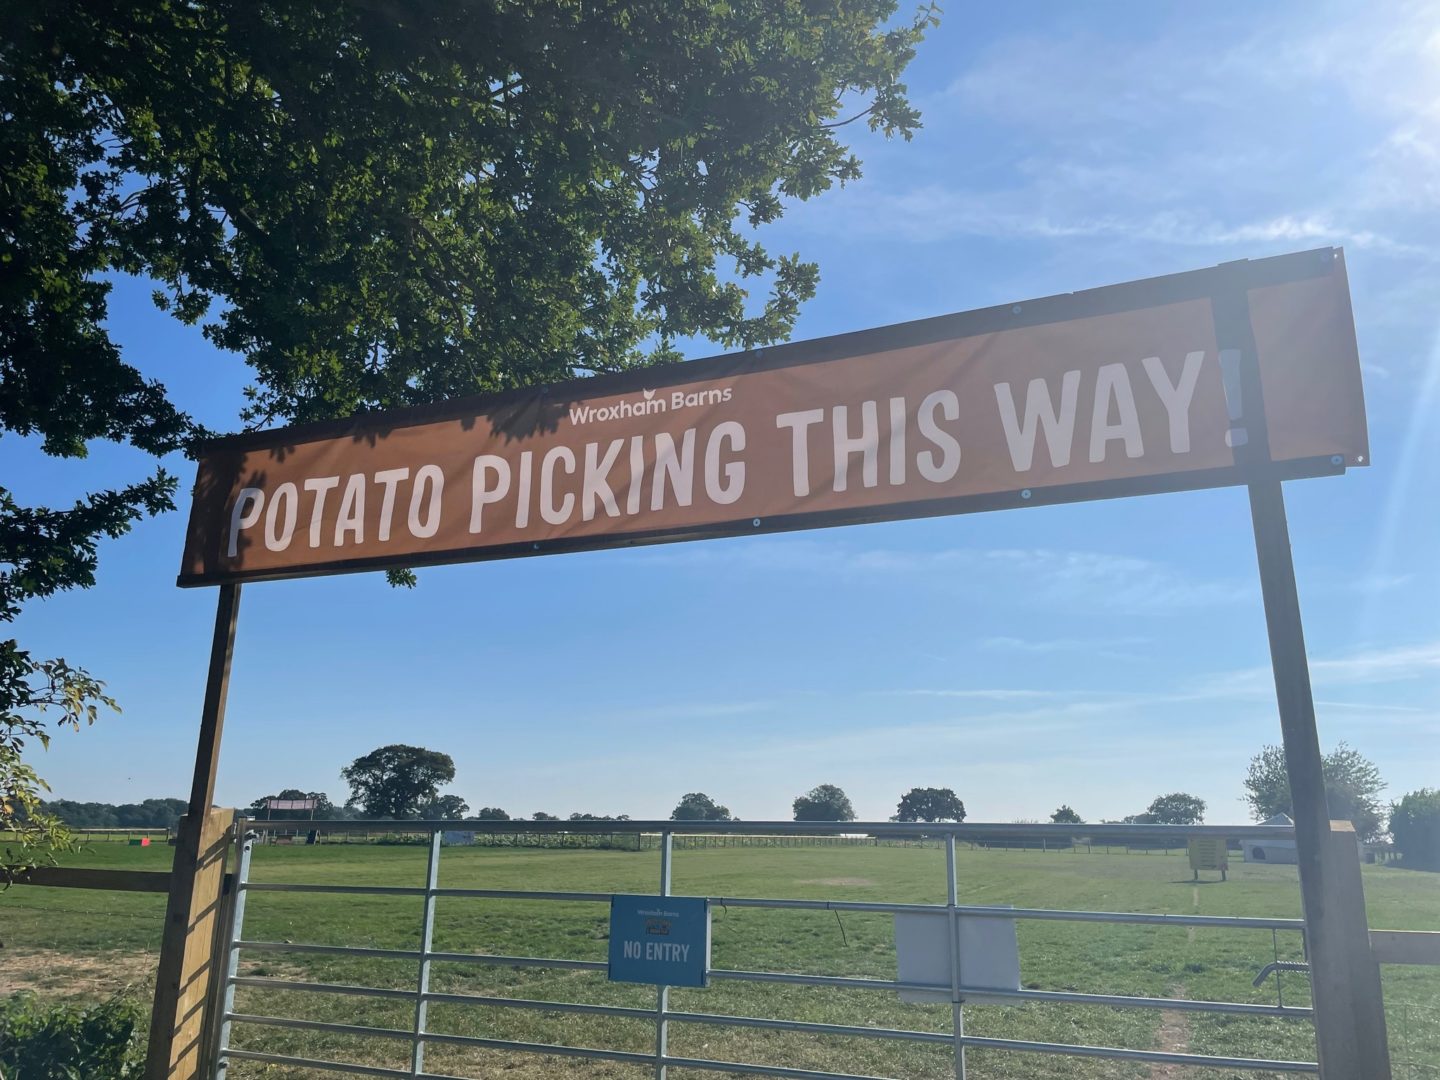 Potato Picking